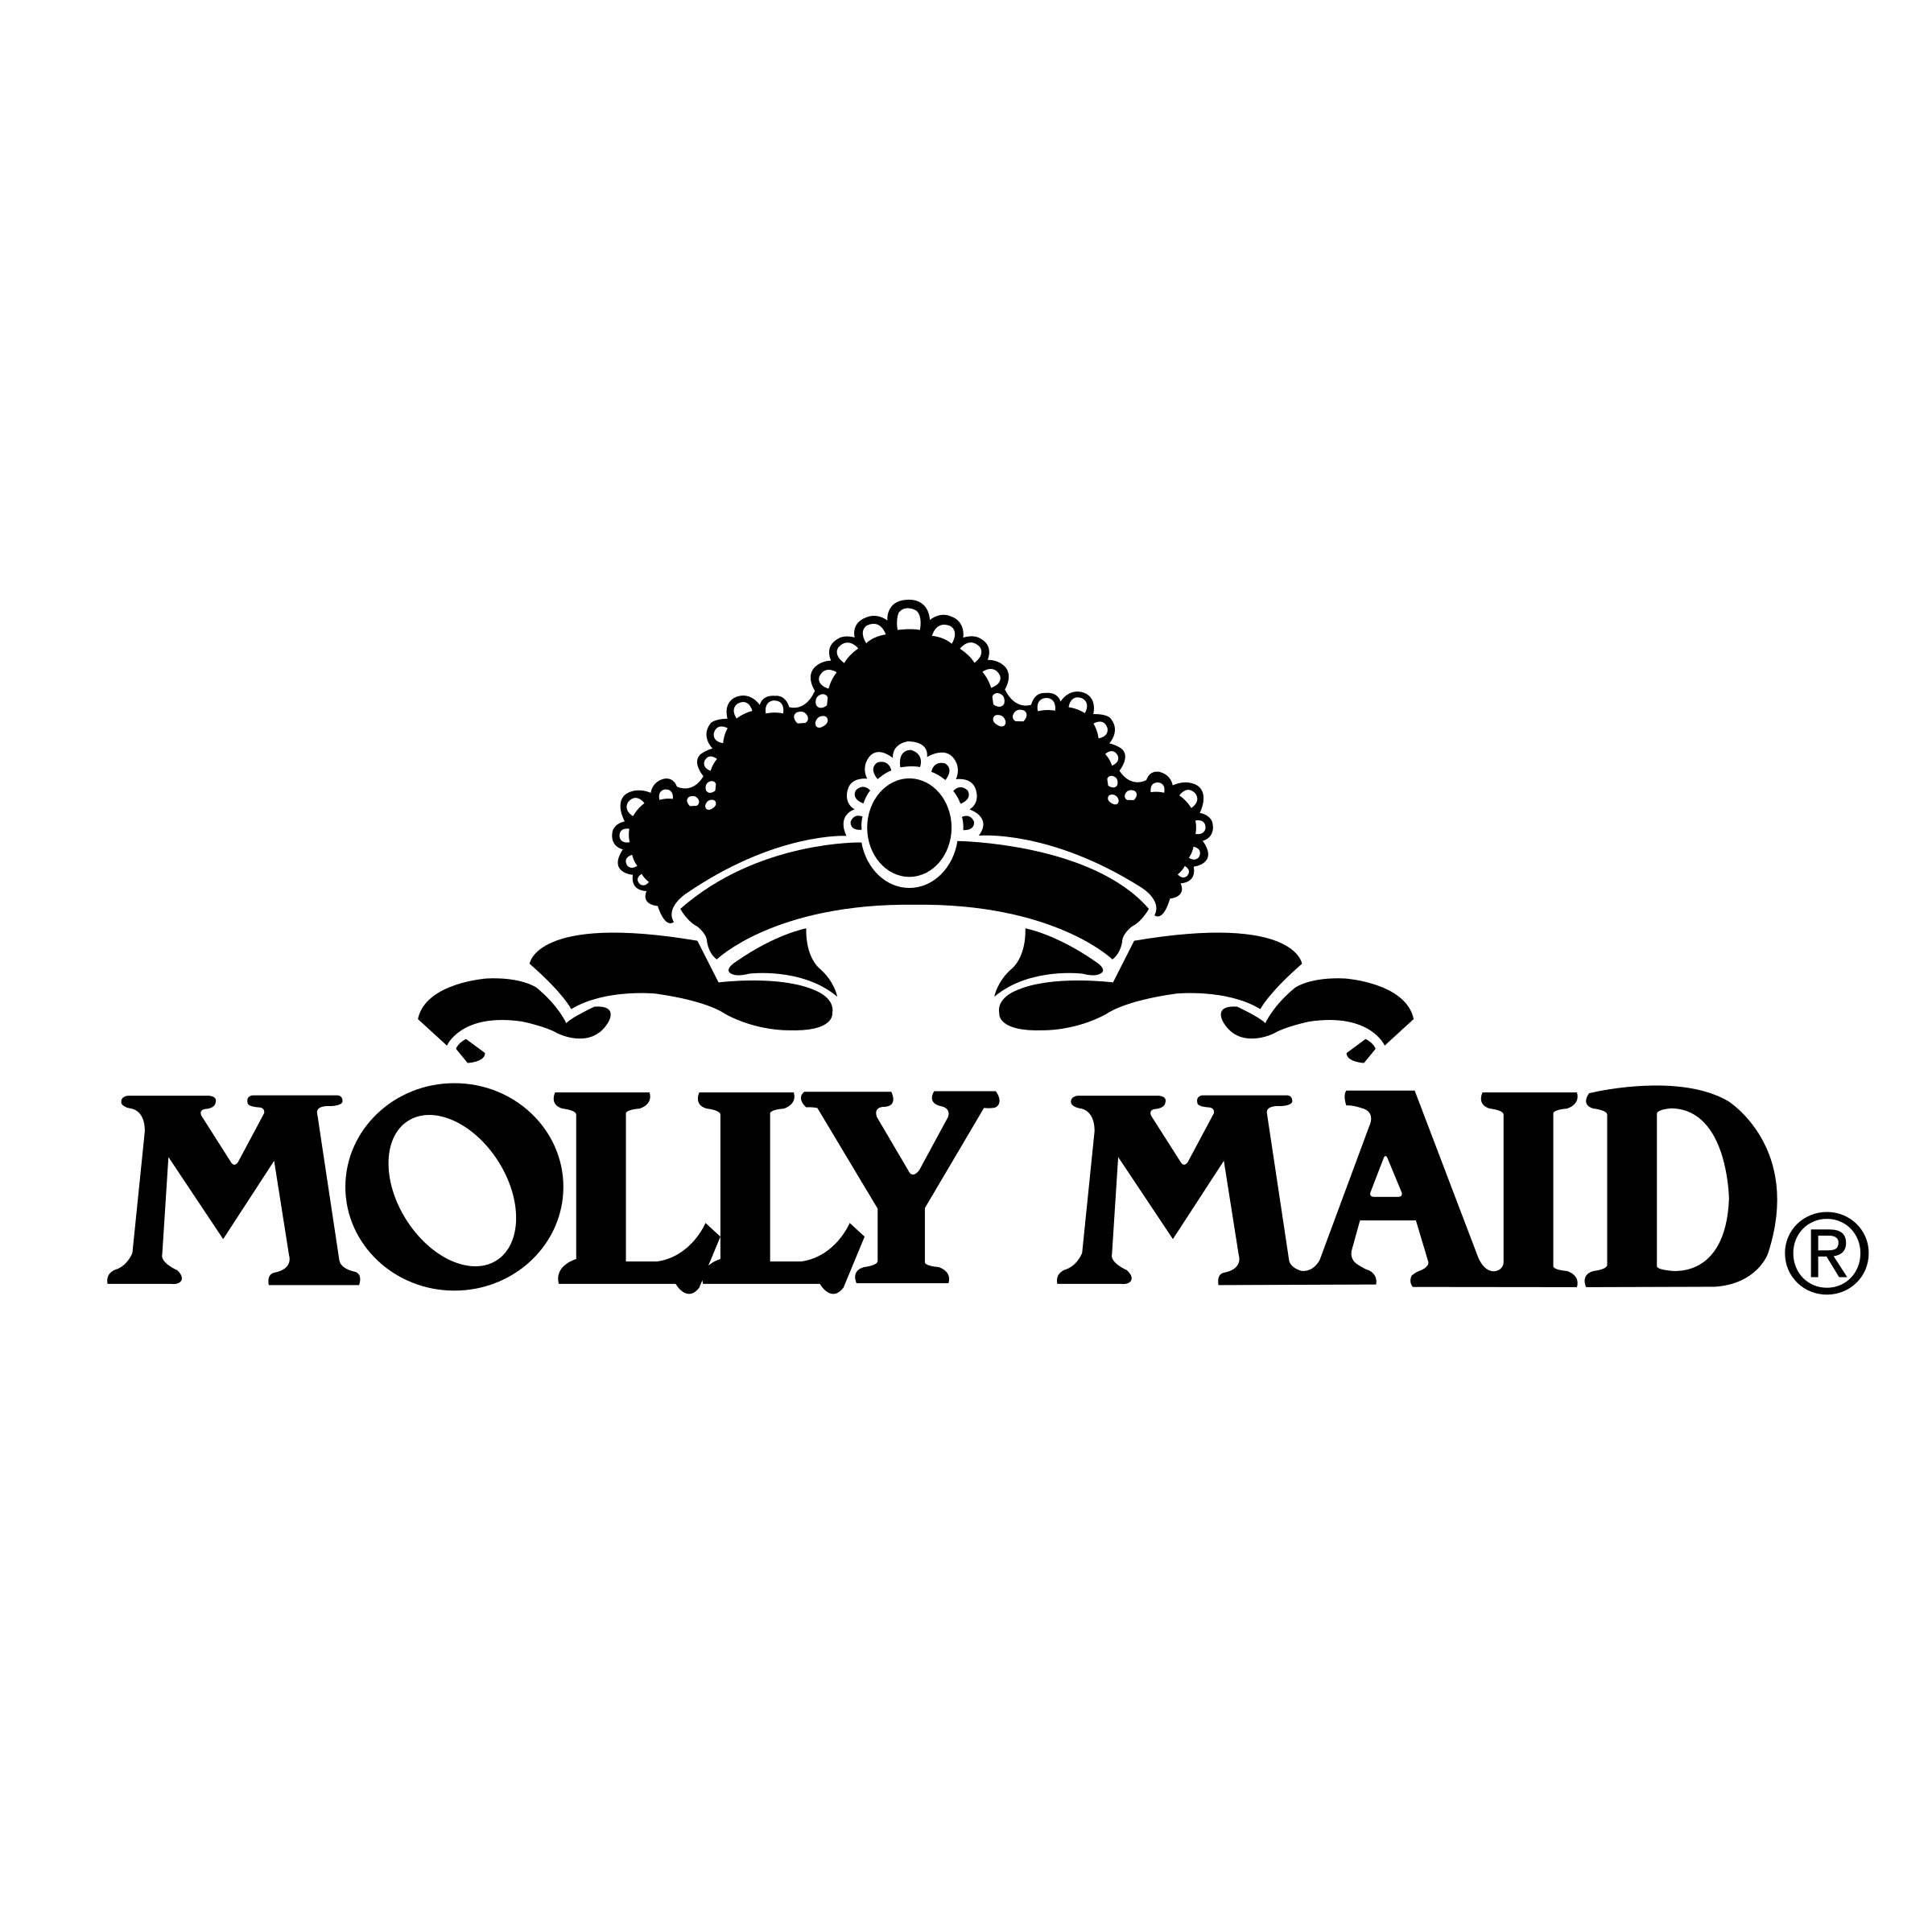 Maid Logo - Molly Maid Logo PNG Transparent & SVG Vector - Freebie Supply